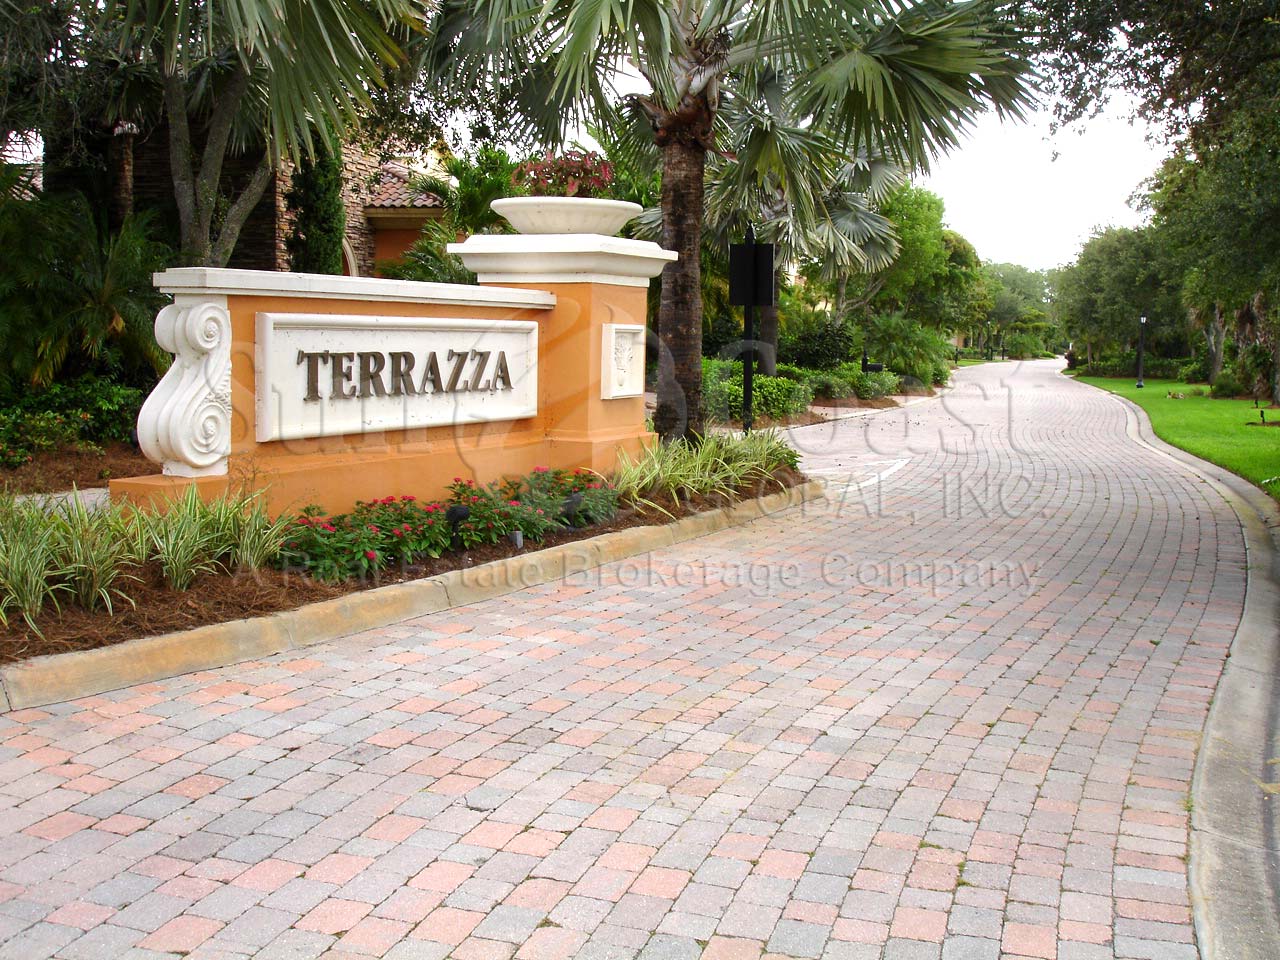 Terrazza Entrance